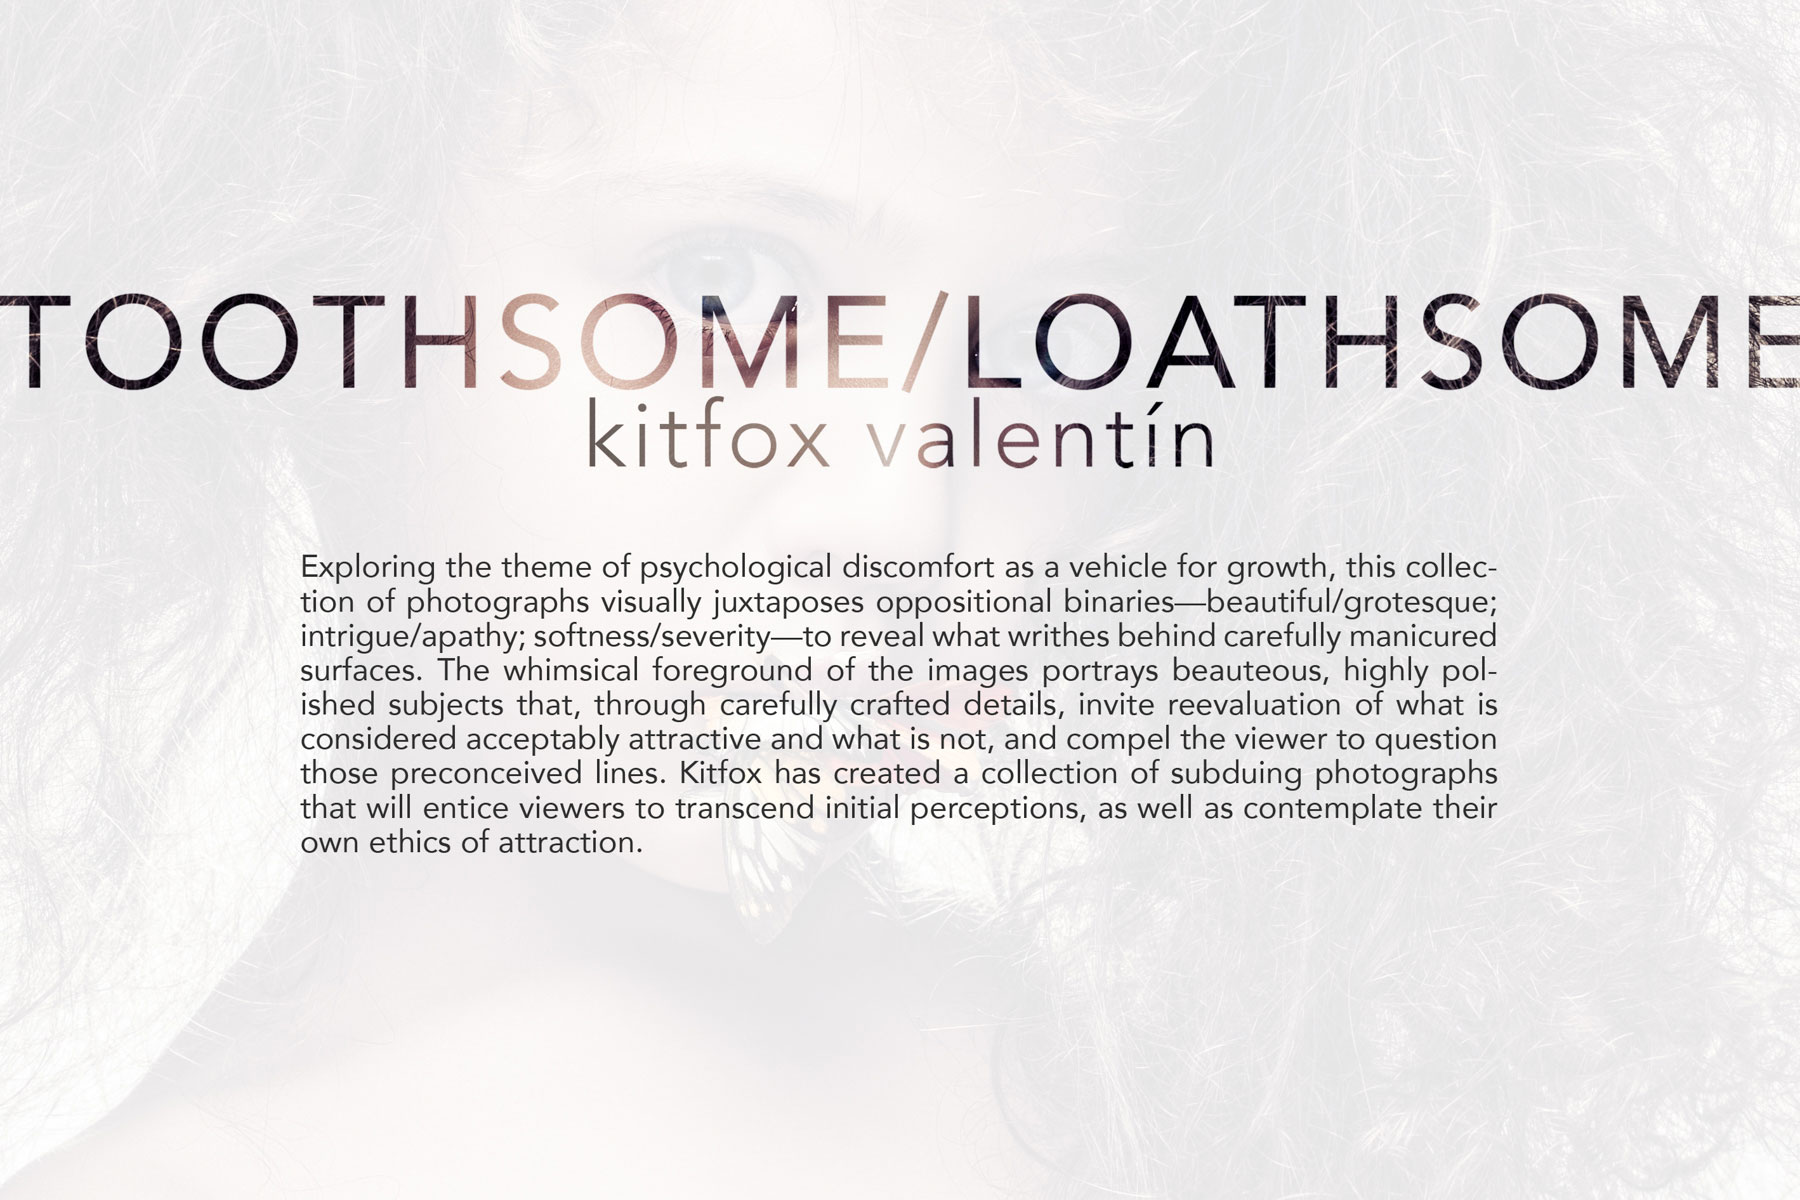 TOOTHSOME/LOATHSOME artist statement of Kitfox Valentin